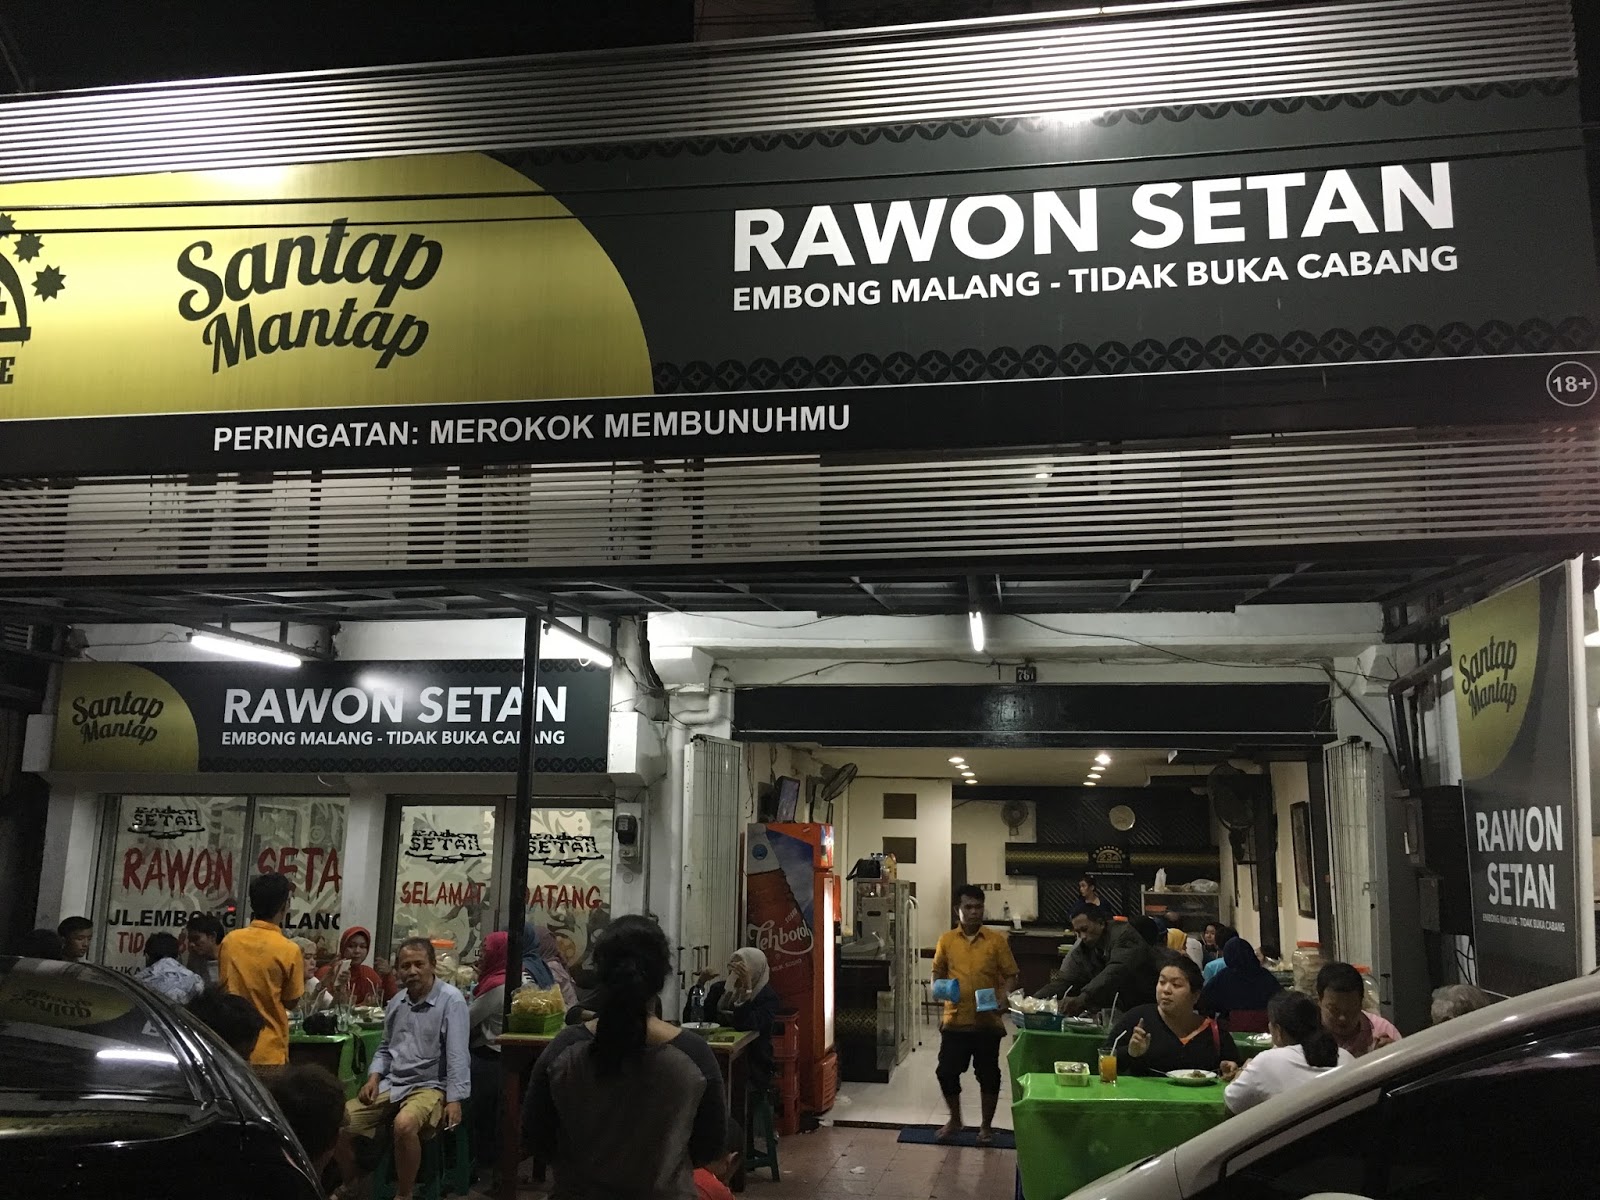 Rawon Setan Kuahnya Nendang dan Khas Surabaya - Kuliner 